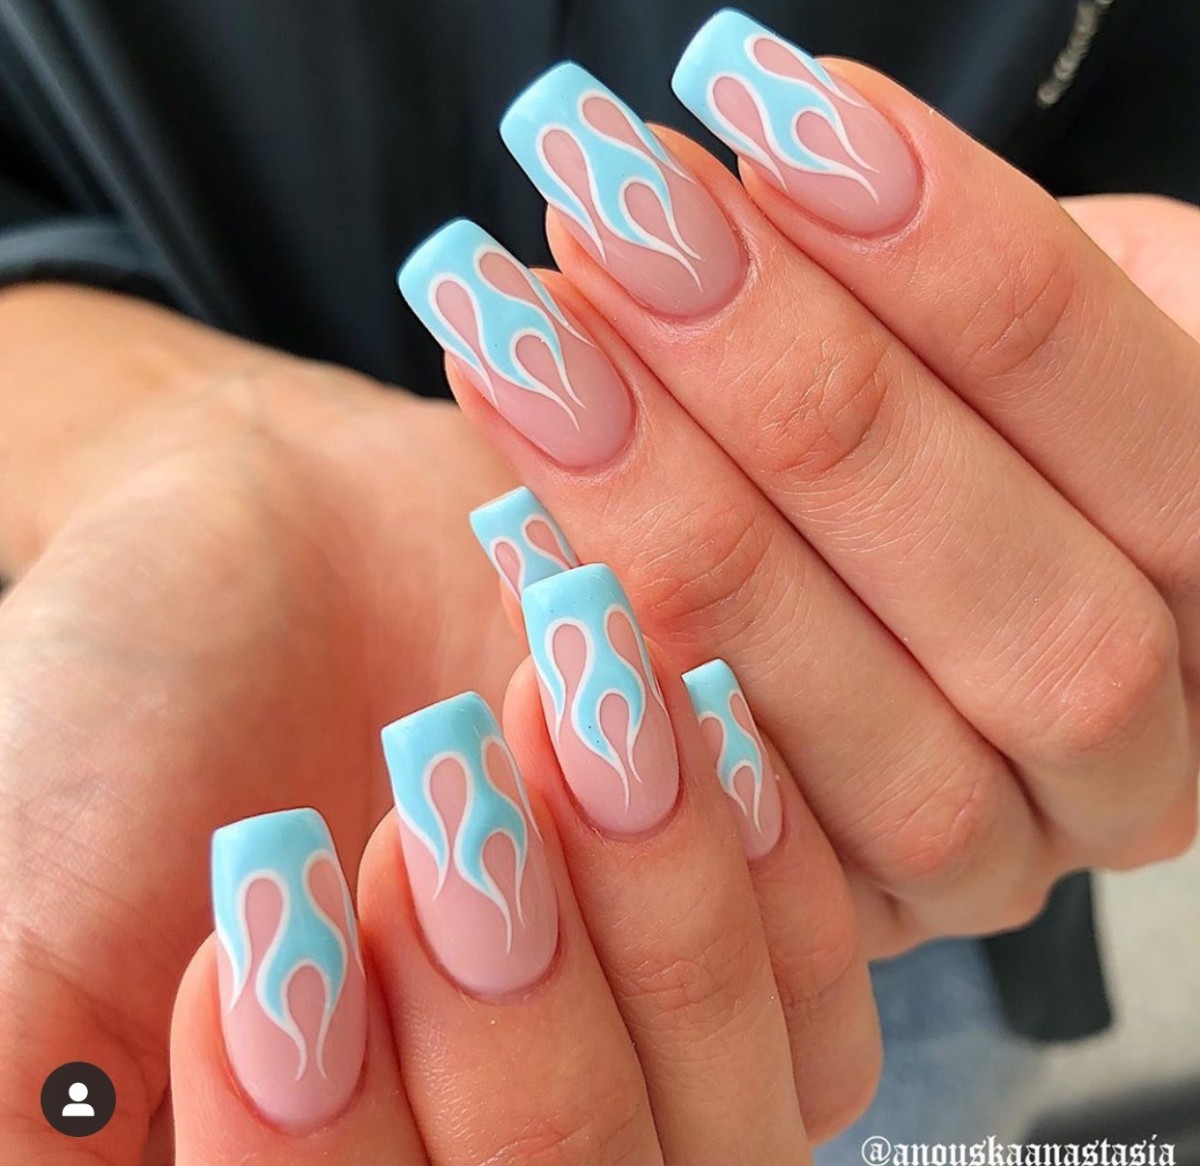 SAVE this cute mani for some summer nails inspo💅🏼 #nailsofinstagram  #nailinspo #summernails #cutenaildesigns | Instagram